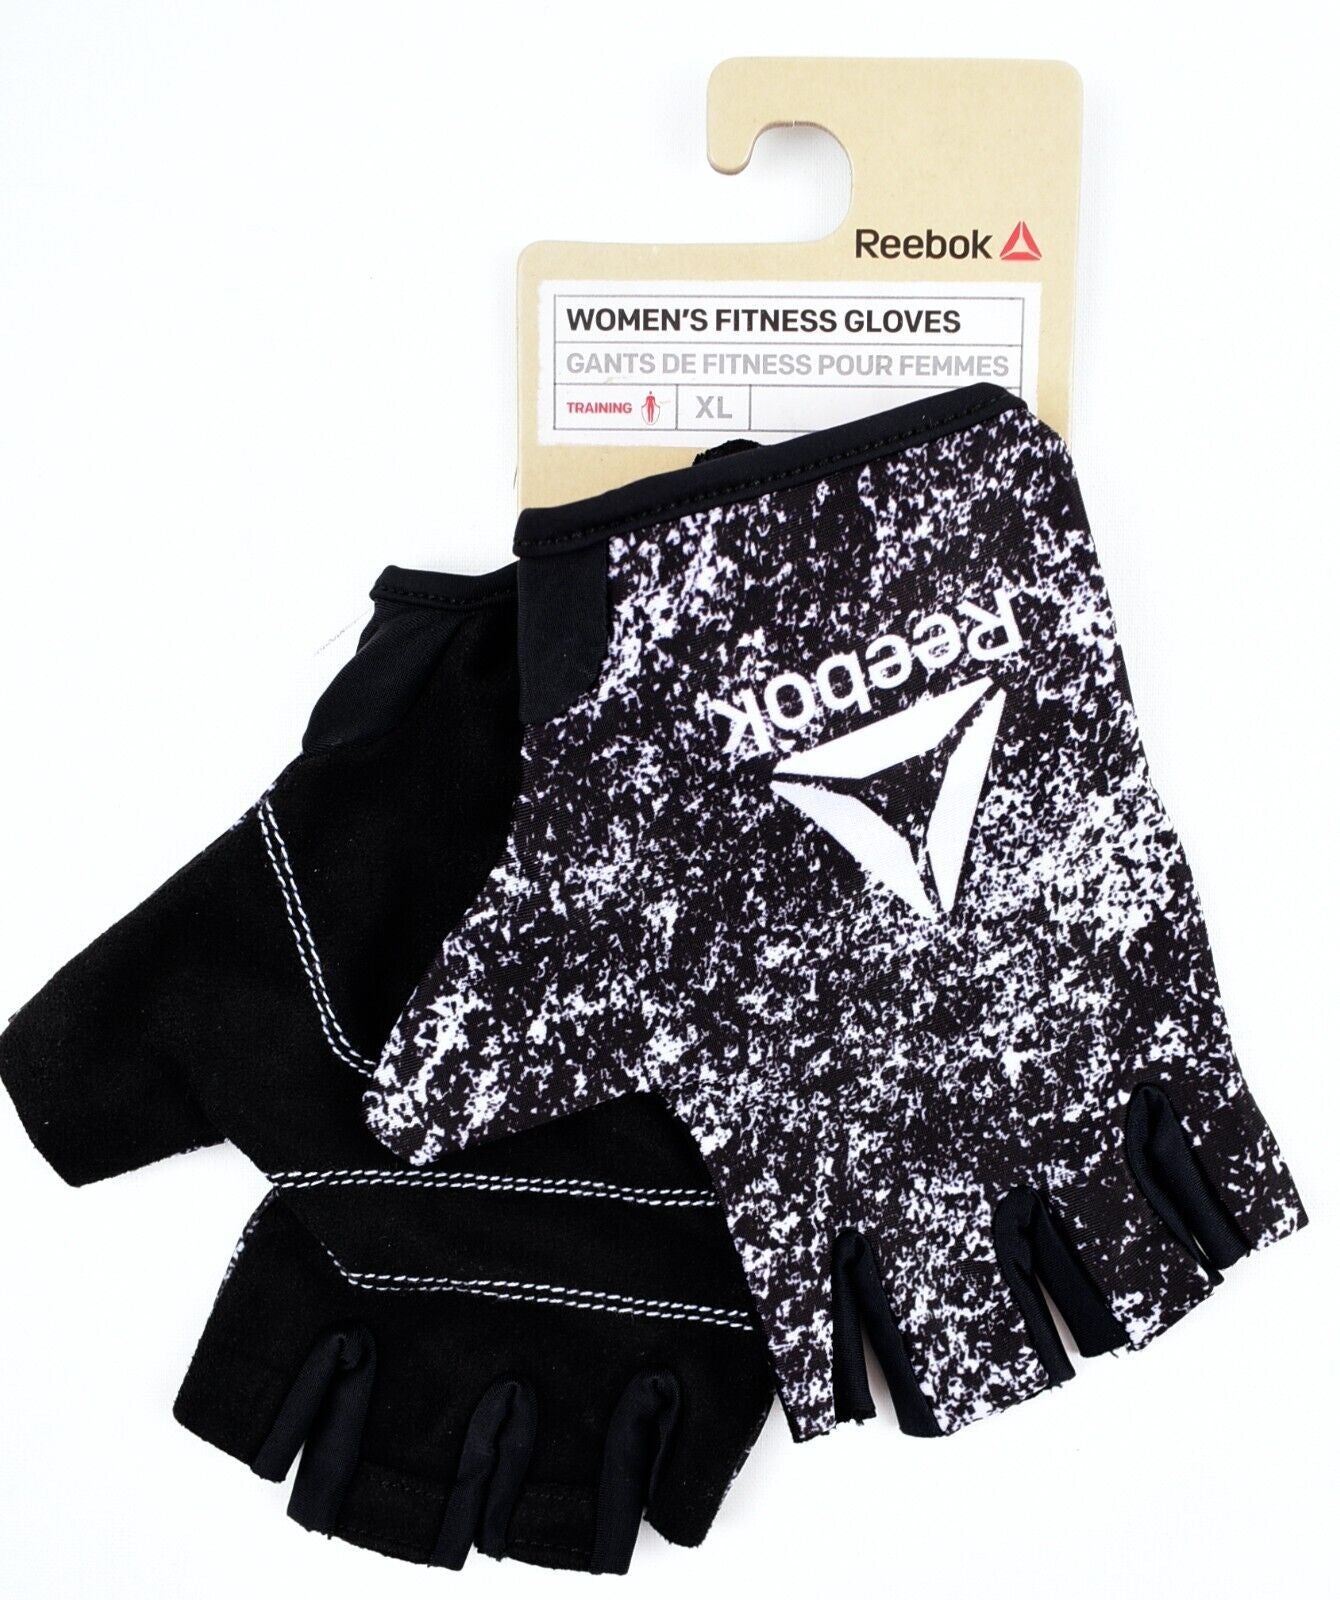 REEBOK Women's Fitness /Training Gloves, Black /White, size XL